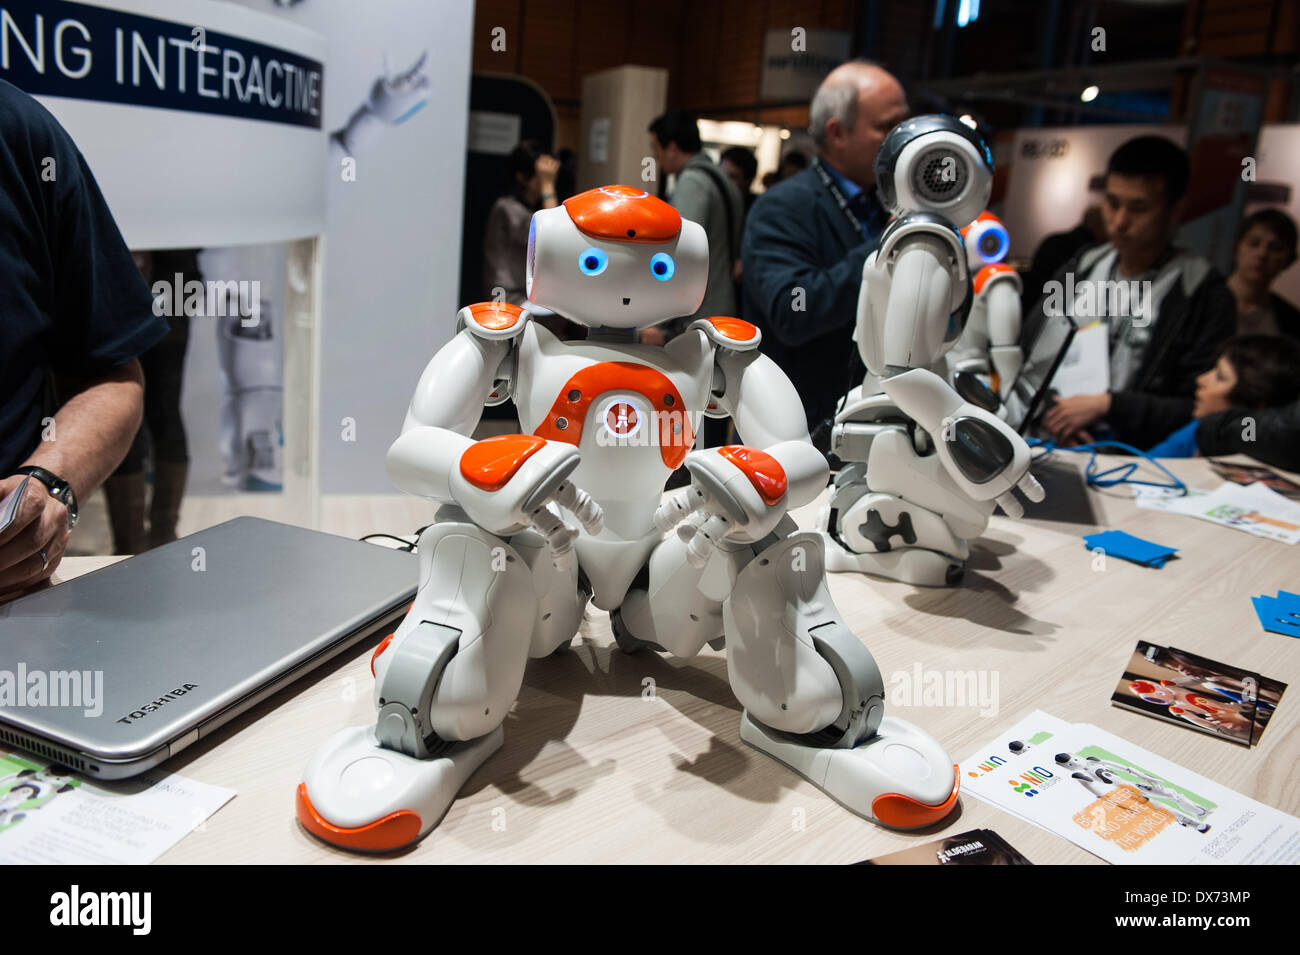 Lyon, France - 19 March 2014: NAO Robot by Aldebaran at Innorobo 2014, the  4th international trade show on service robotics. Credit: Piero  Cruciatti/Alamy Live News Stock Photo - Alamy